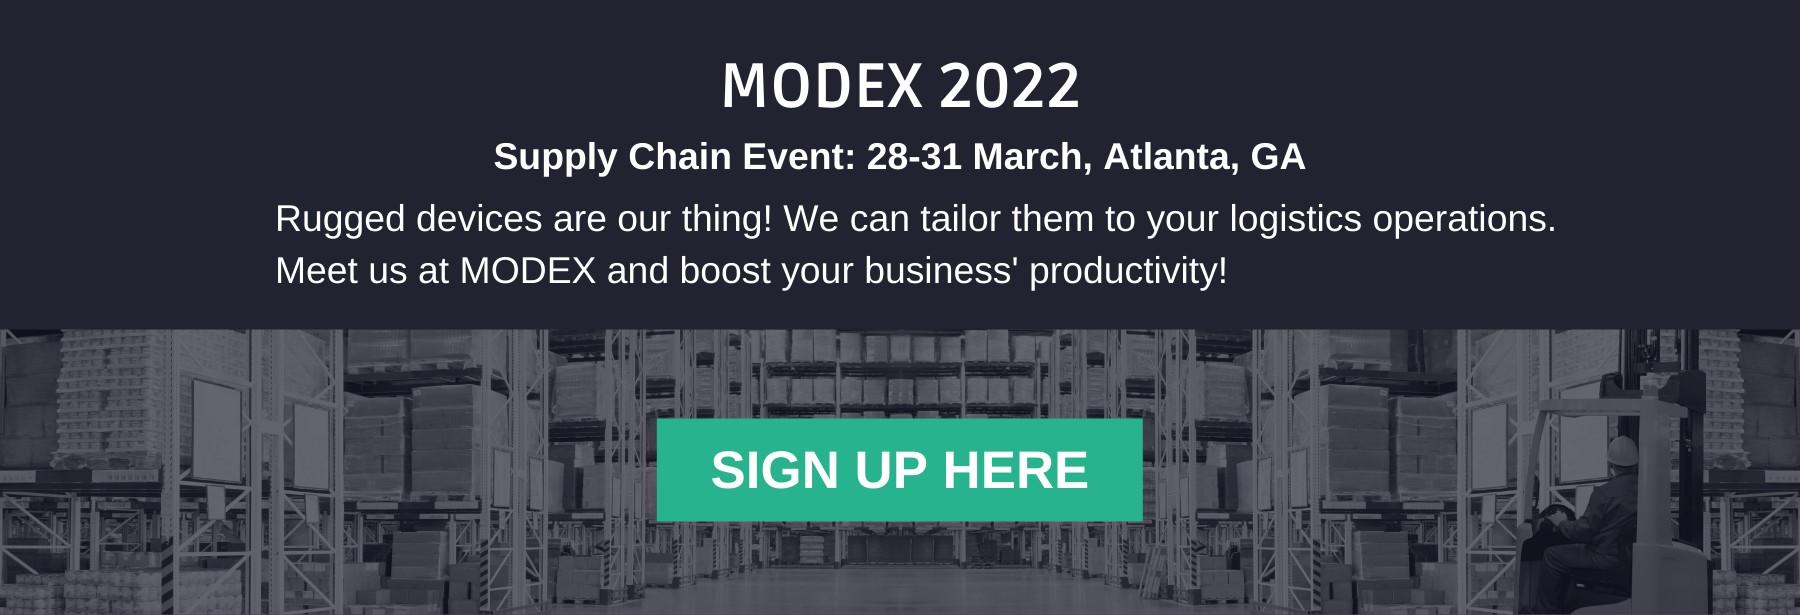 Modex 2022